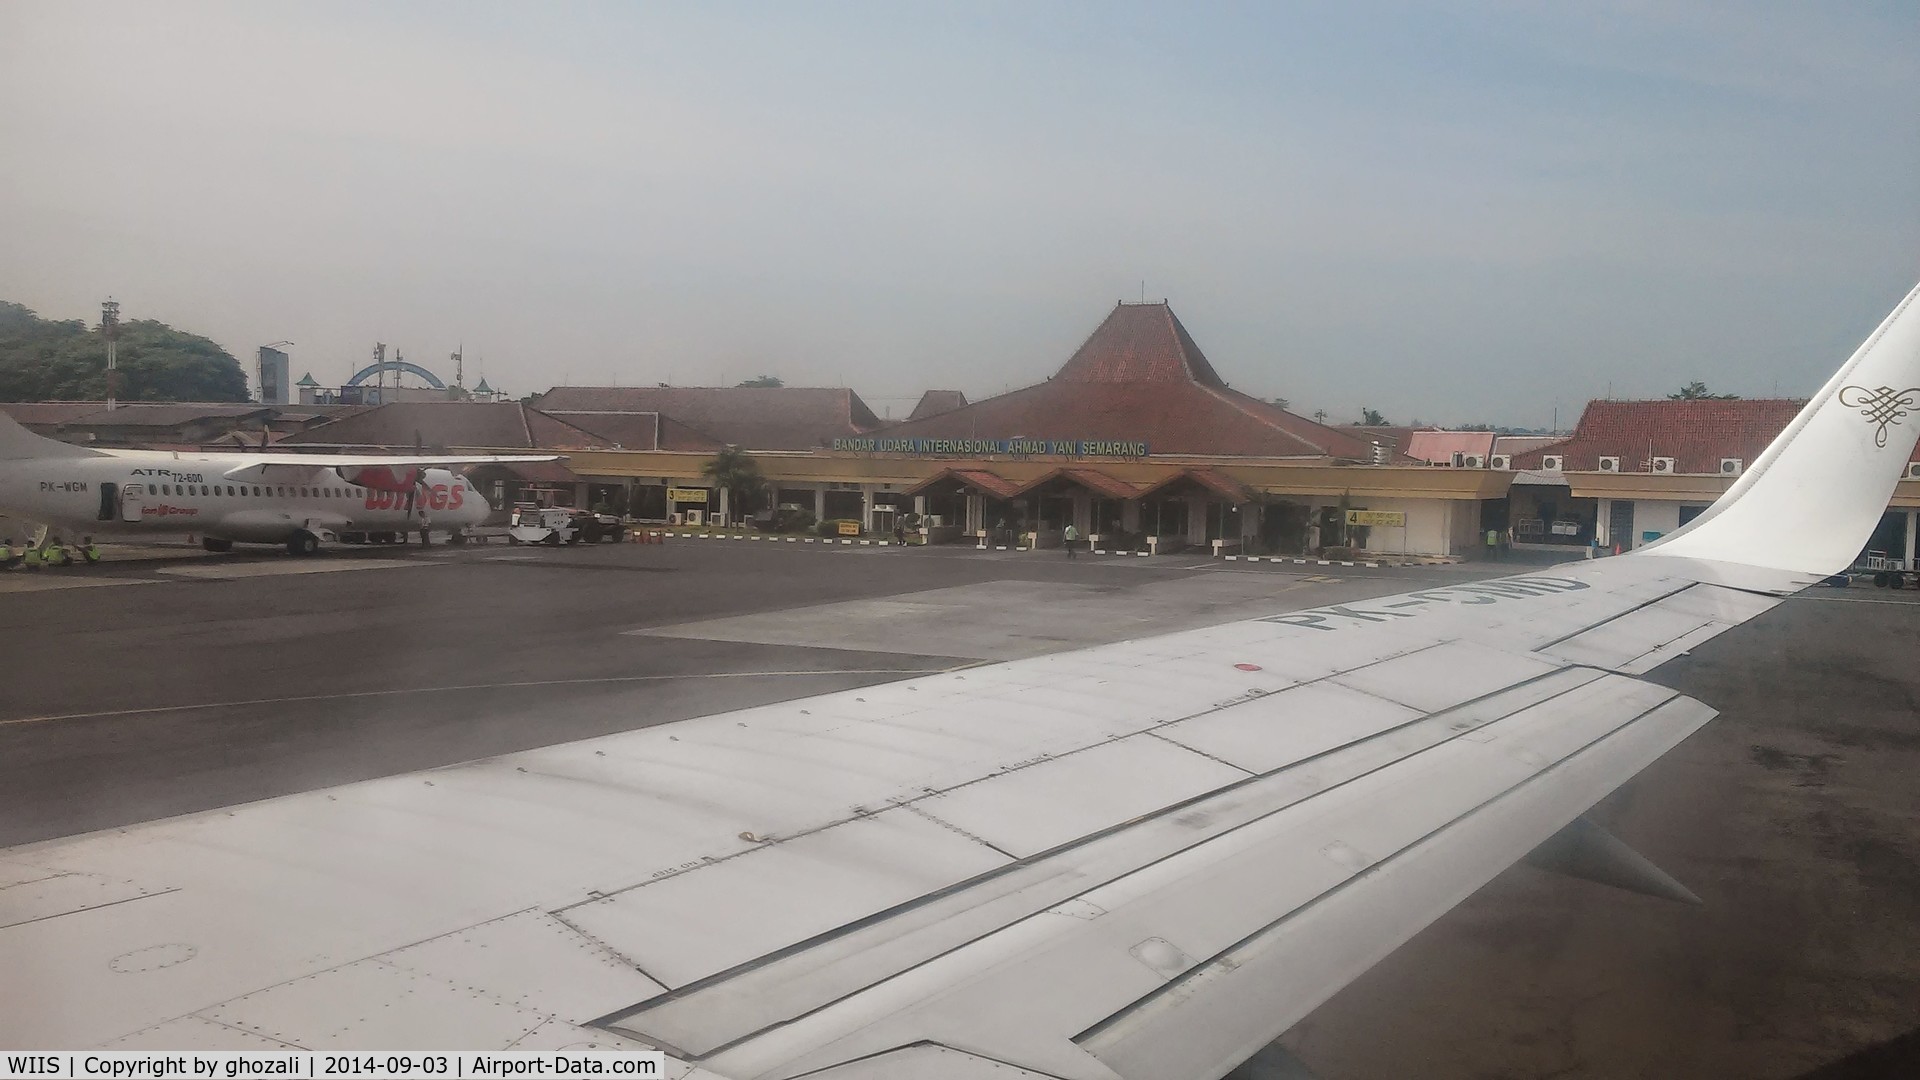 Achmad Yani Airport, Semarang, Central Java Indonesia (WIIS) - 122.300 MHz